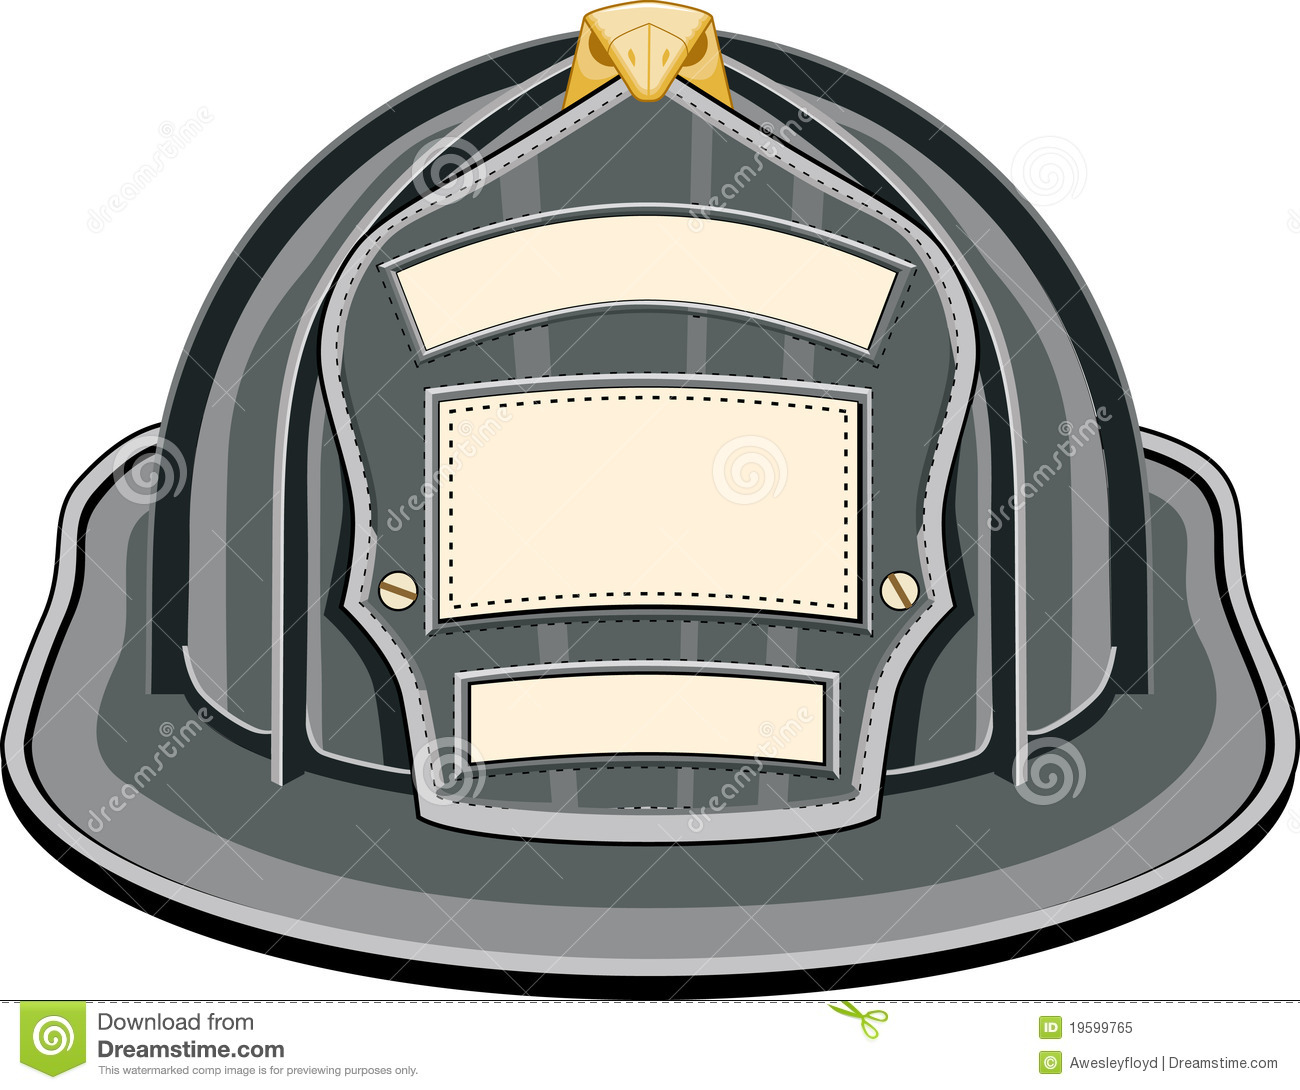 Firefighter Helmet Black Royalty Free Stock Photo Image 19599765